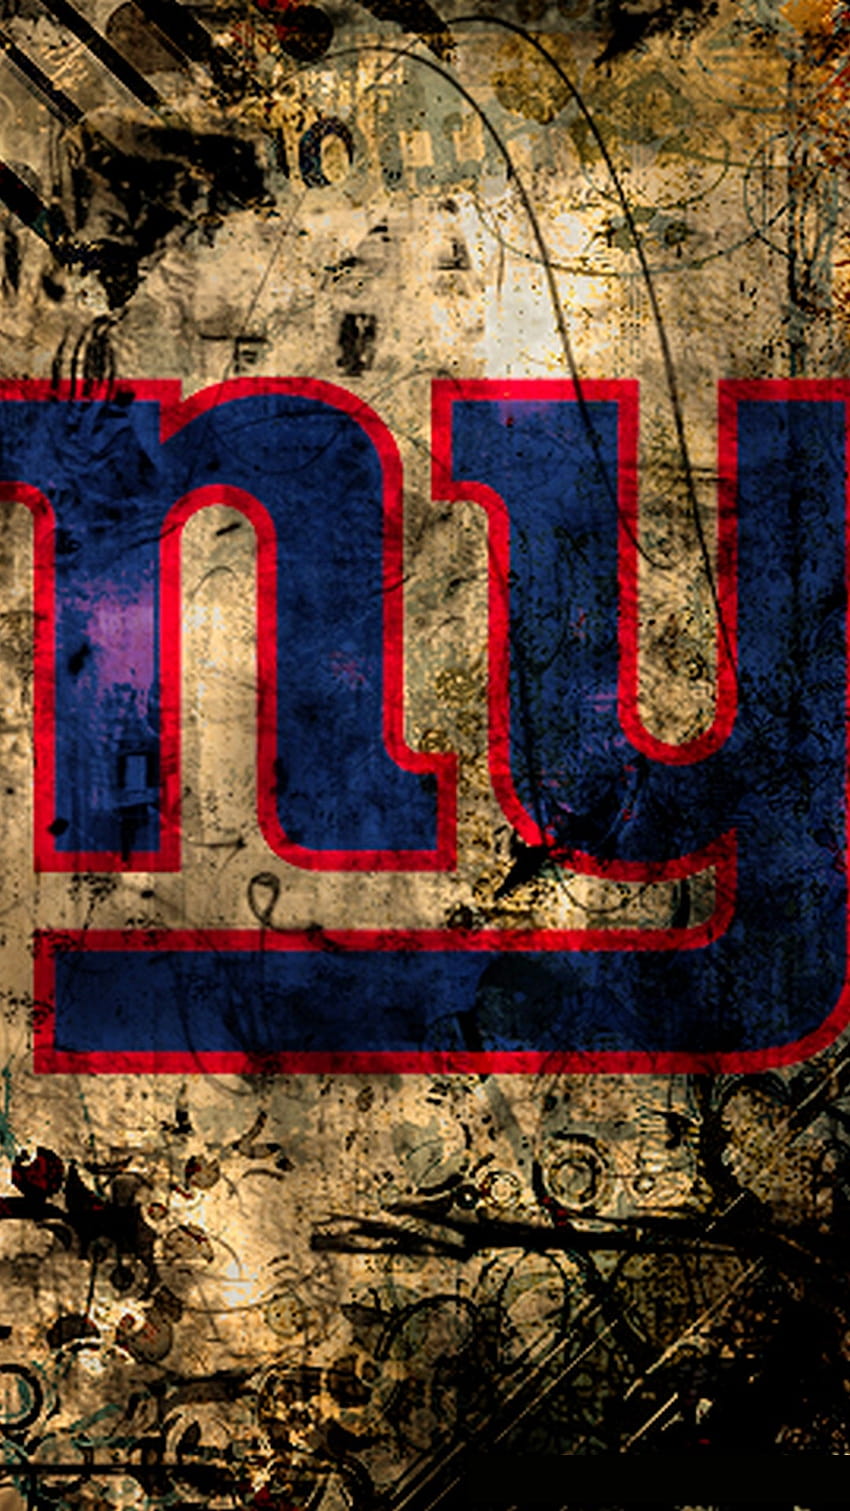 New York Giants Wallpaper IPhone 62 images